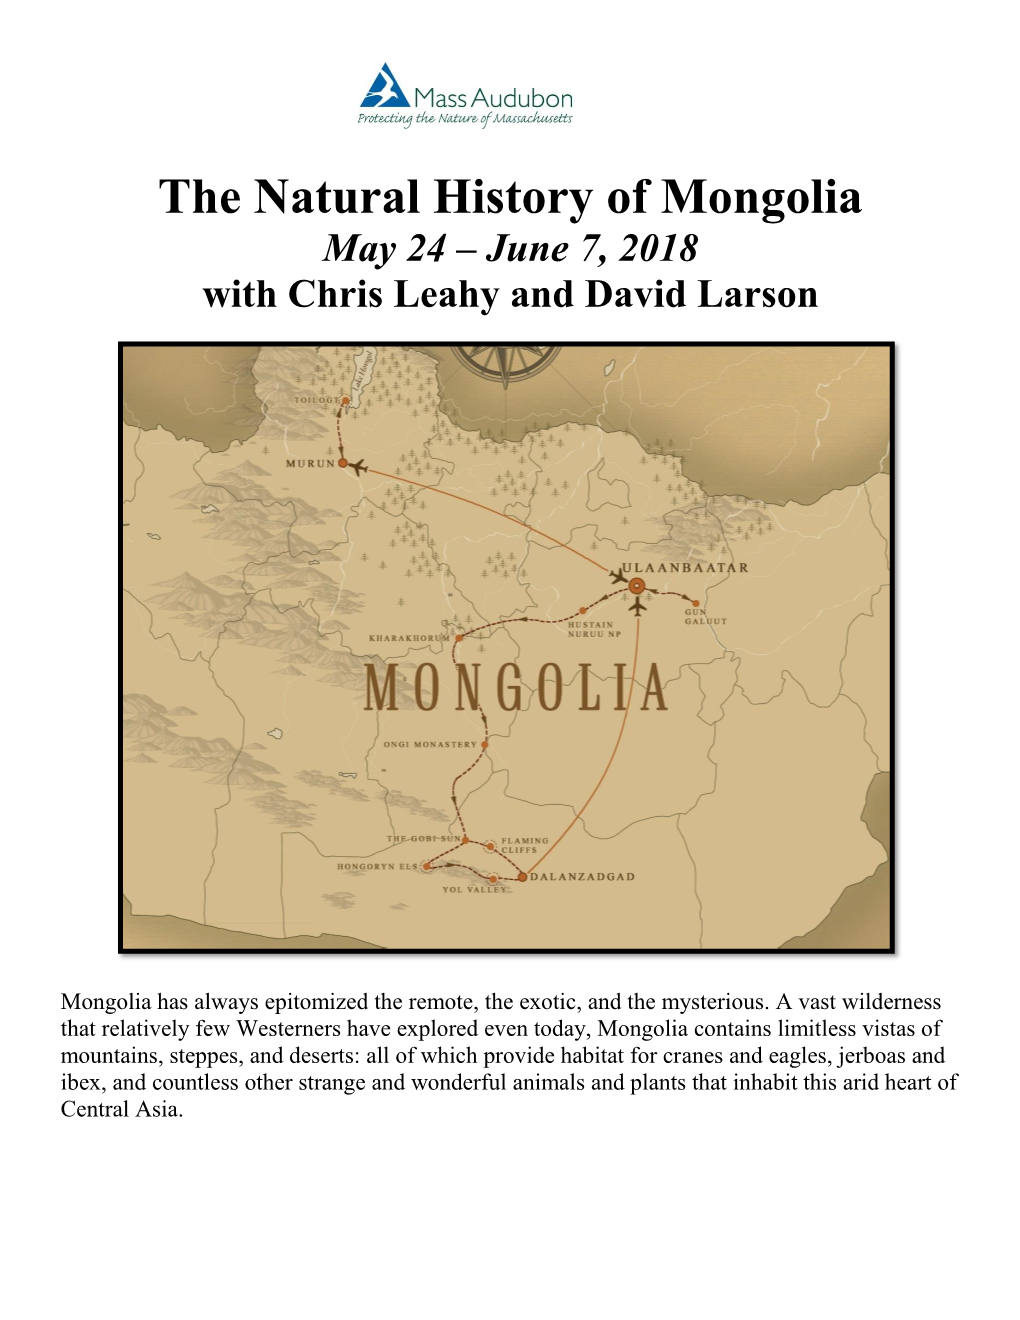 The Natural History of Mongolia May 24 – June 7, 2018 with Chris Leahy and David Larson